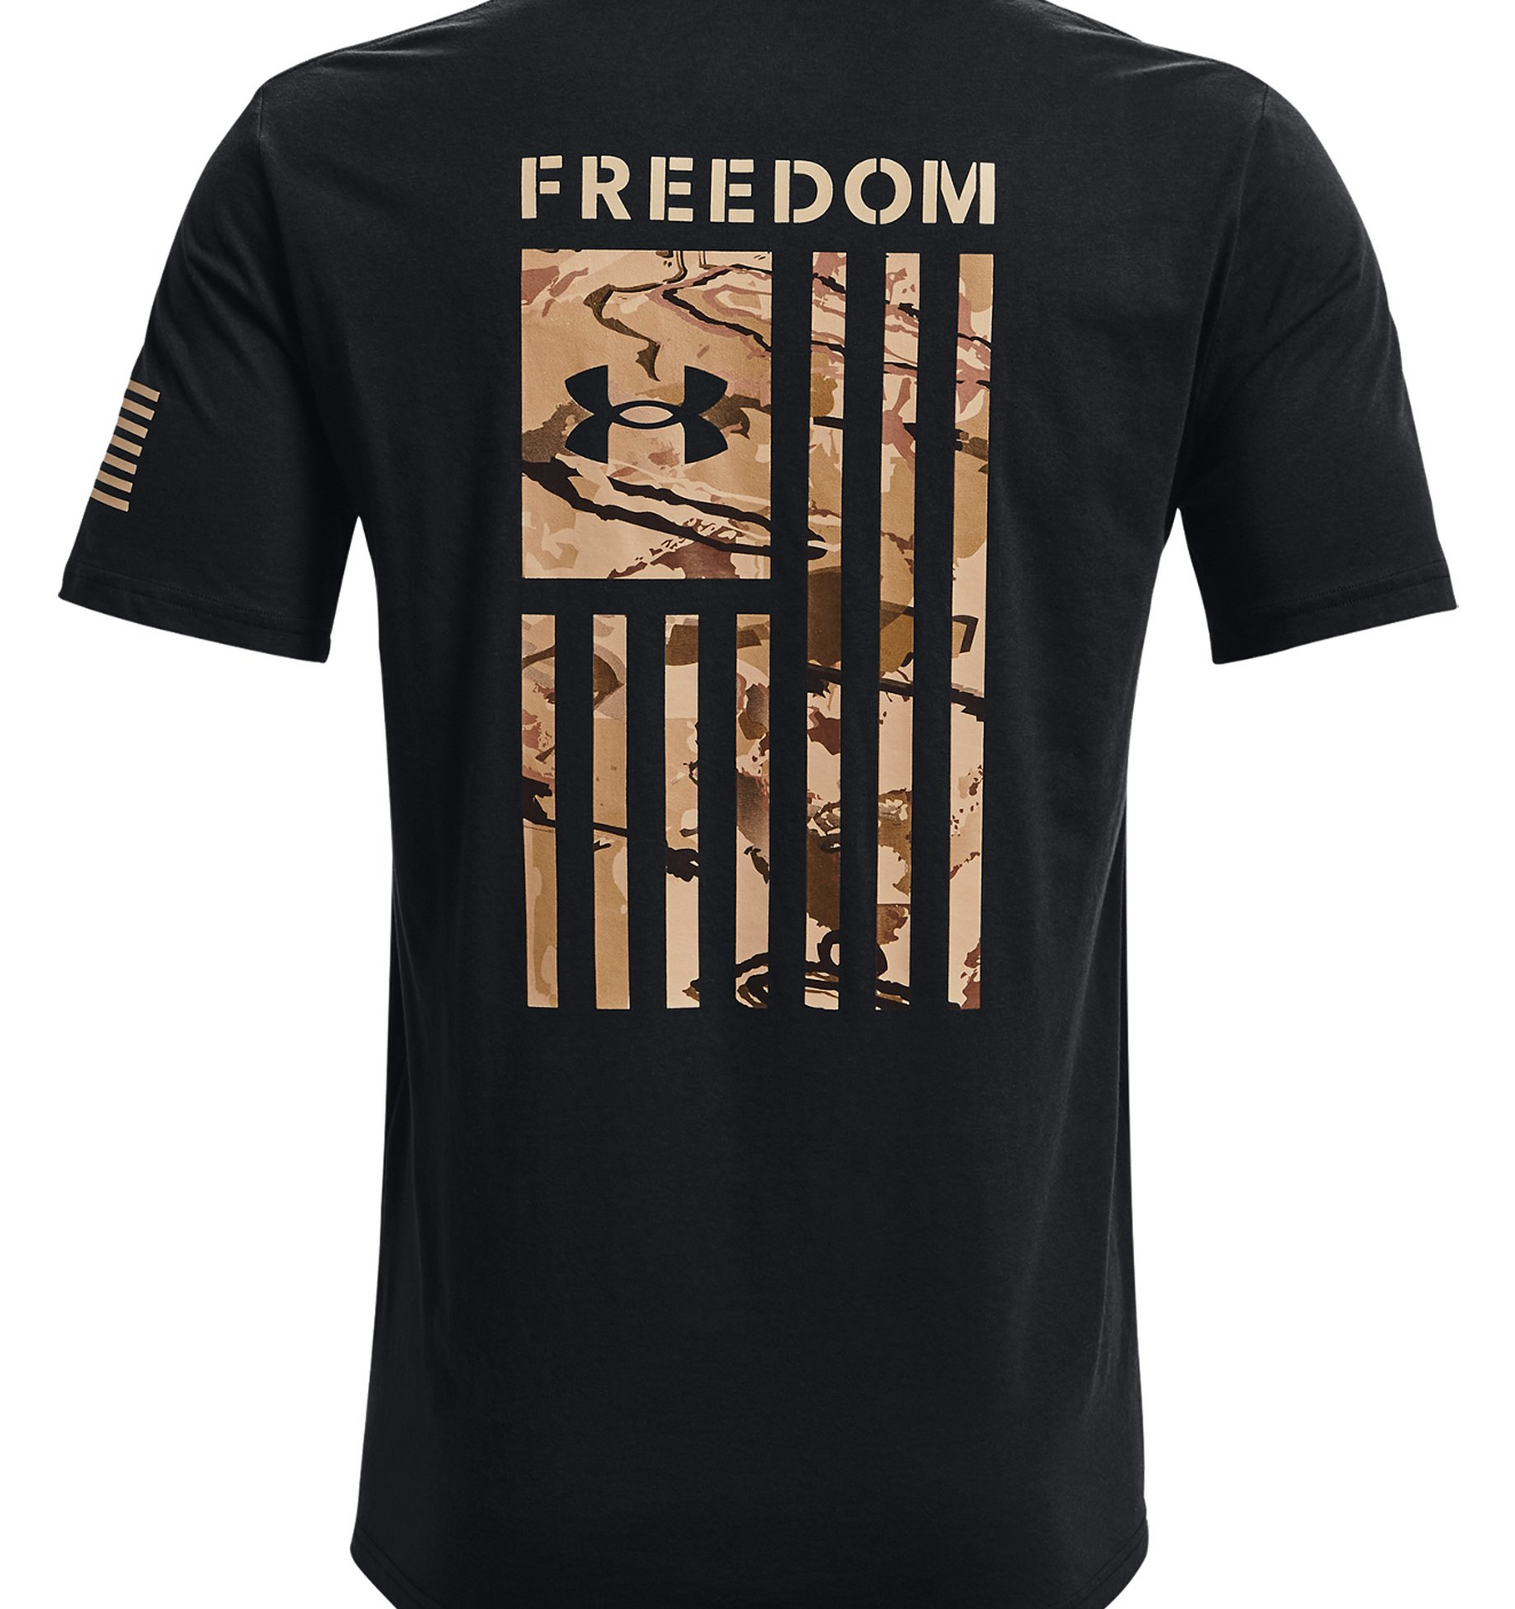 Ua Freedom Flag Camo T-shirt - KR1370816001LG